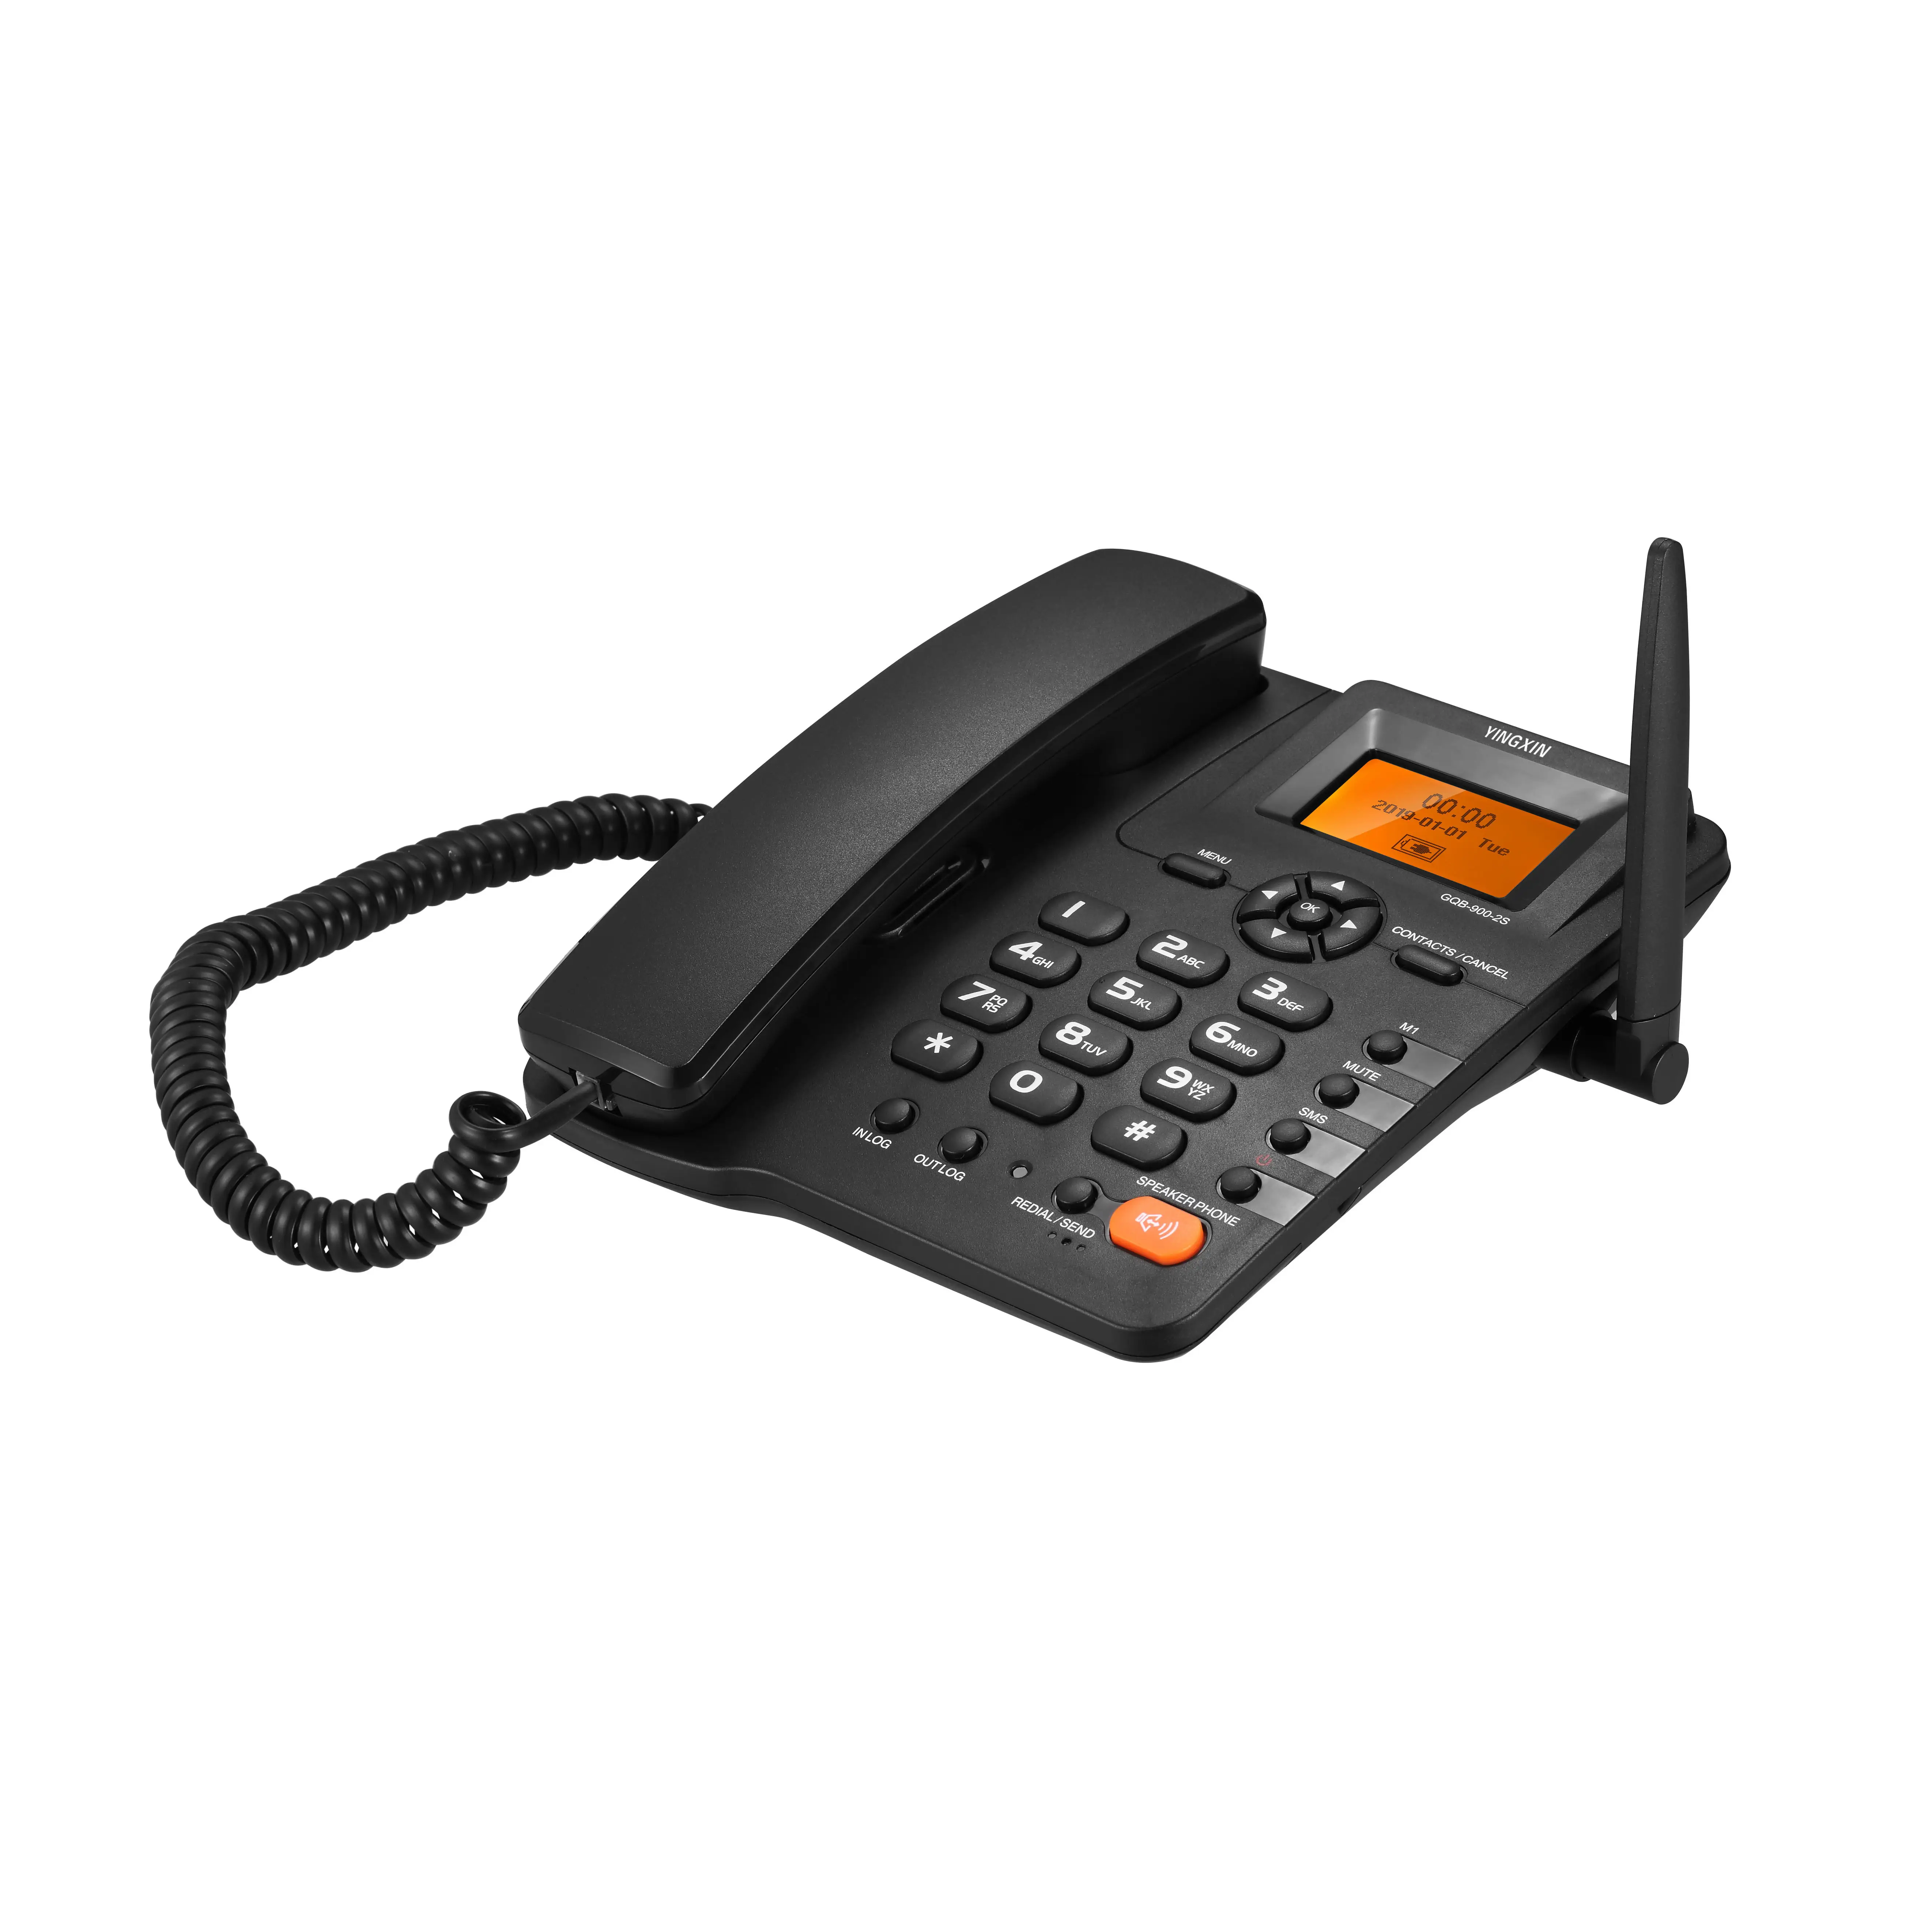 ESN-3B telepon nirkabel desktop telepon FWP, GSM 2g dua SIM tetap nirkabel